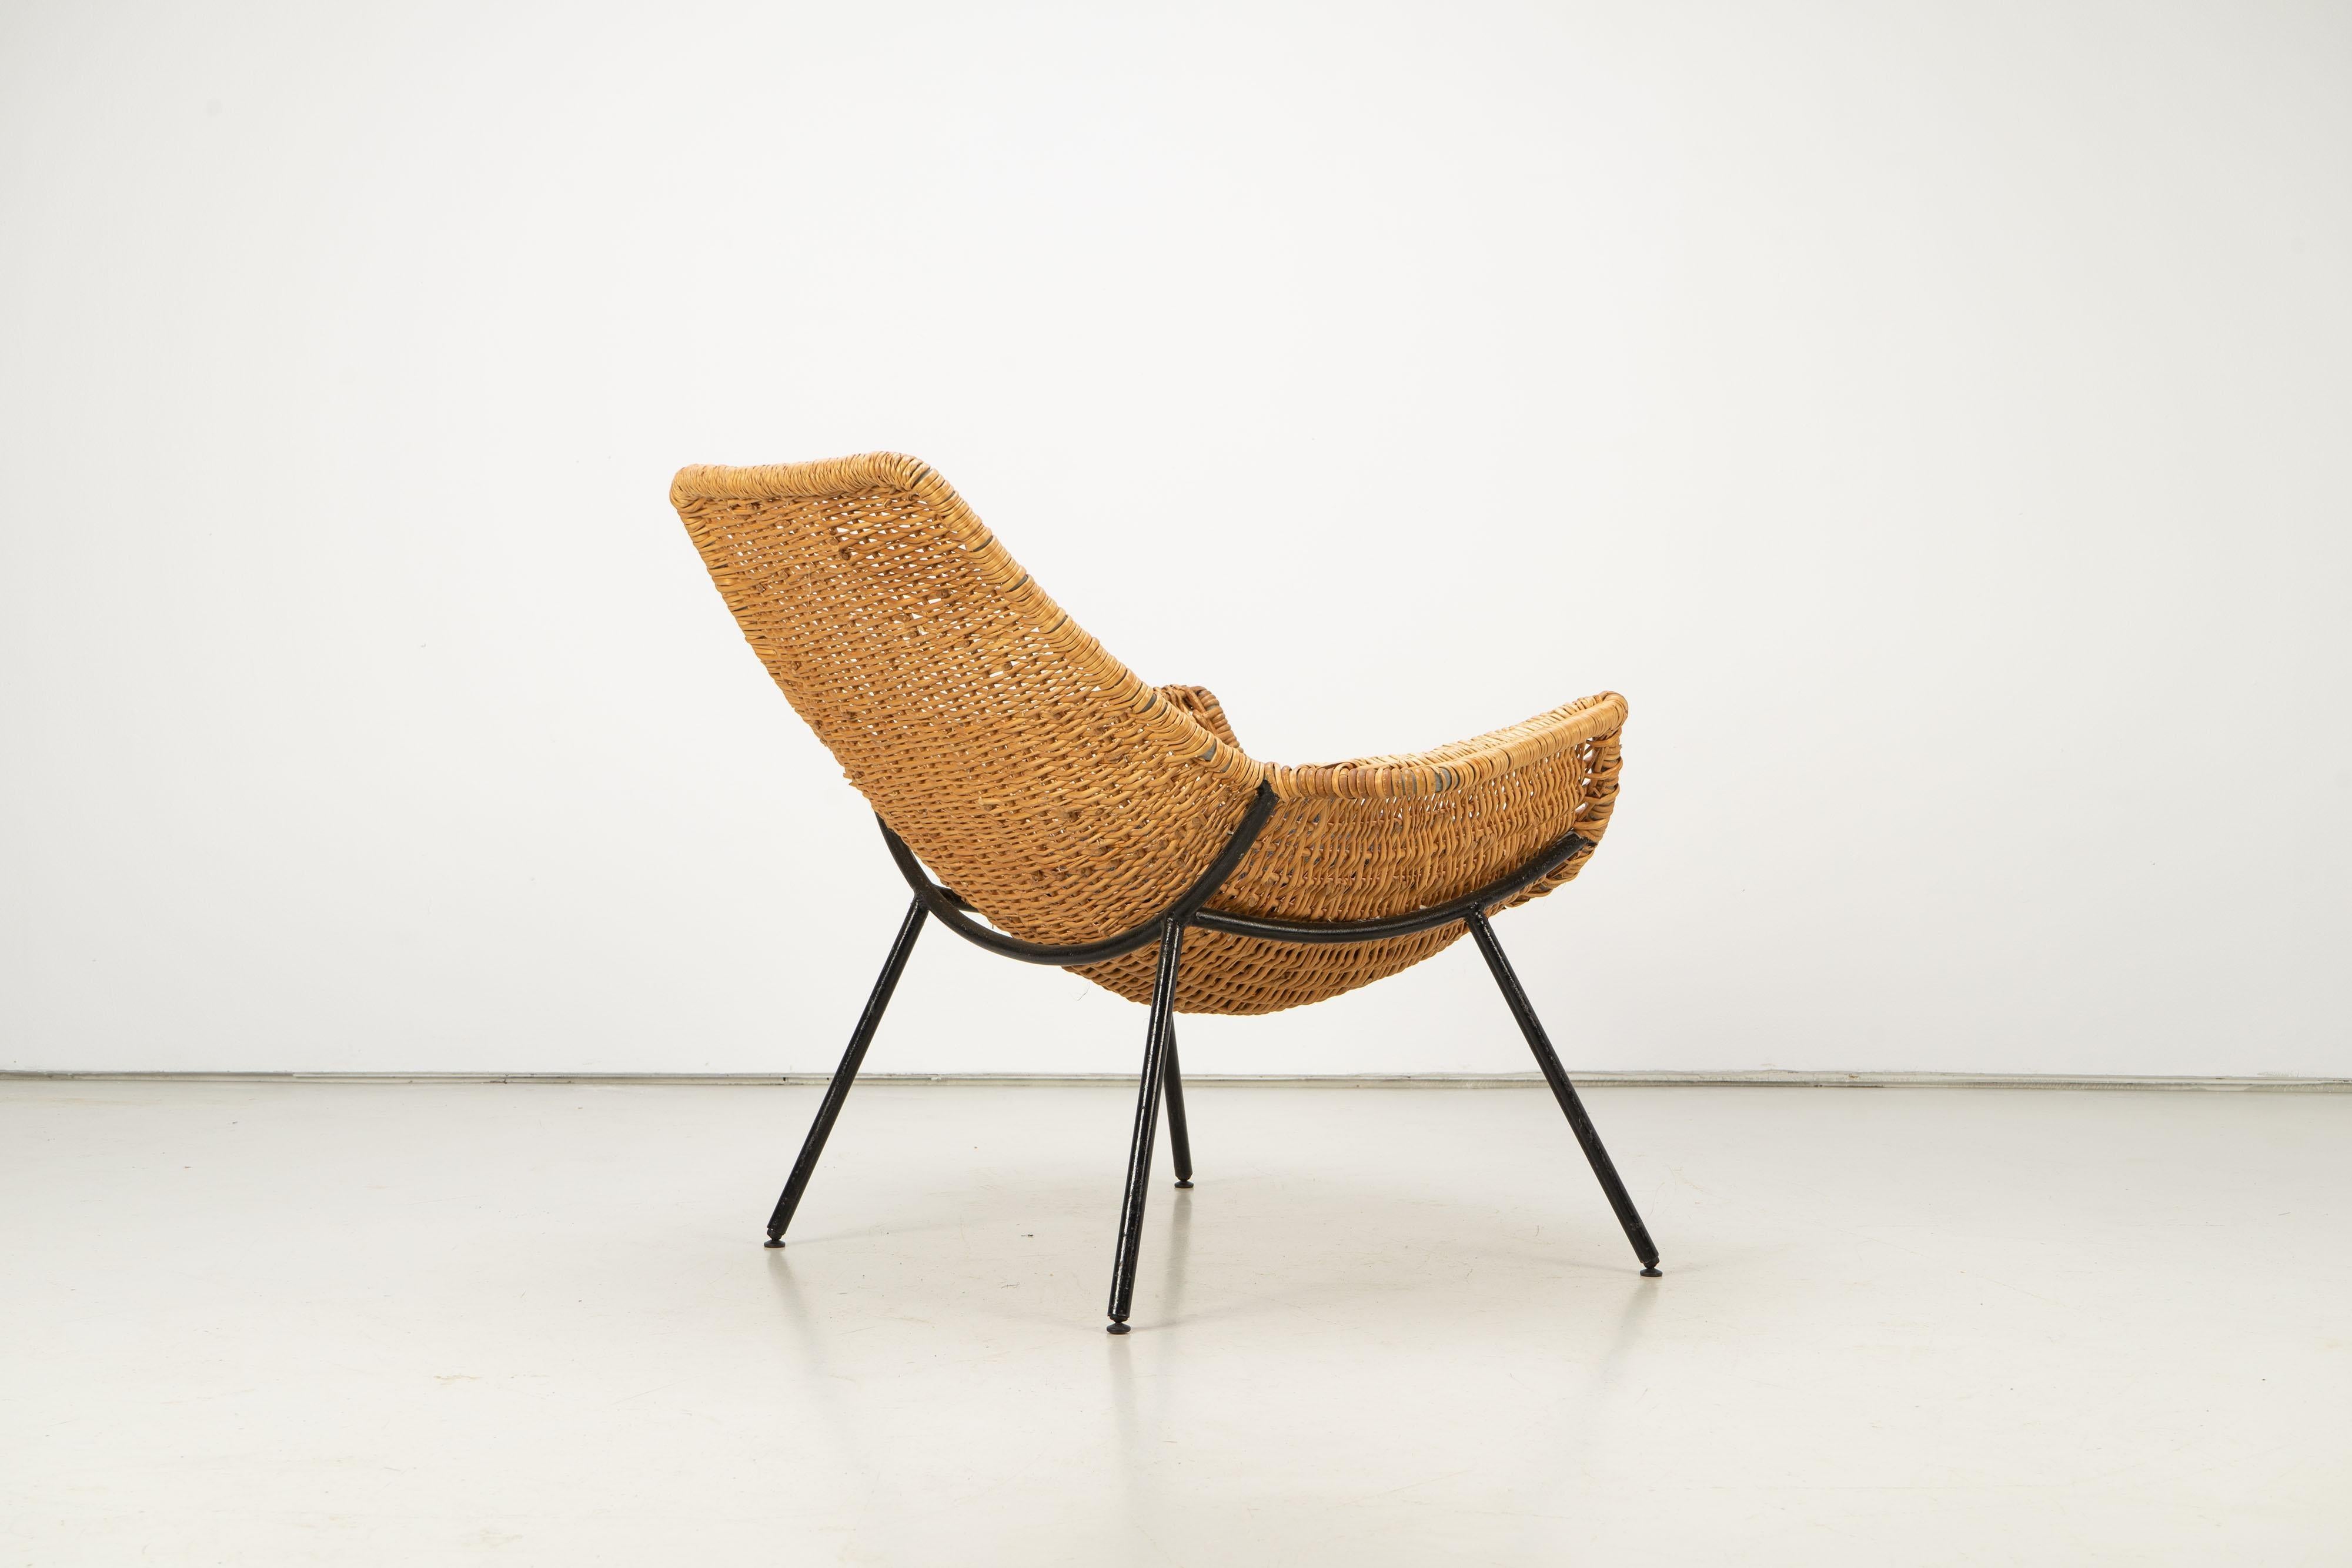 Steel Mid-Century Modern Rattan Lounge Chair by Giancarlo De Carlo, Italy, 1954